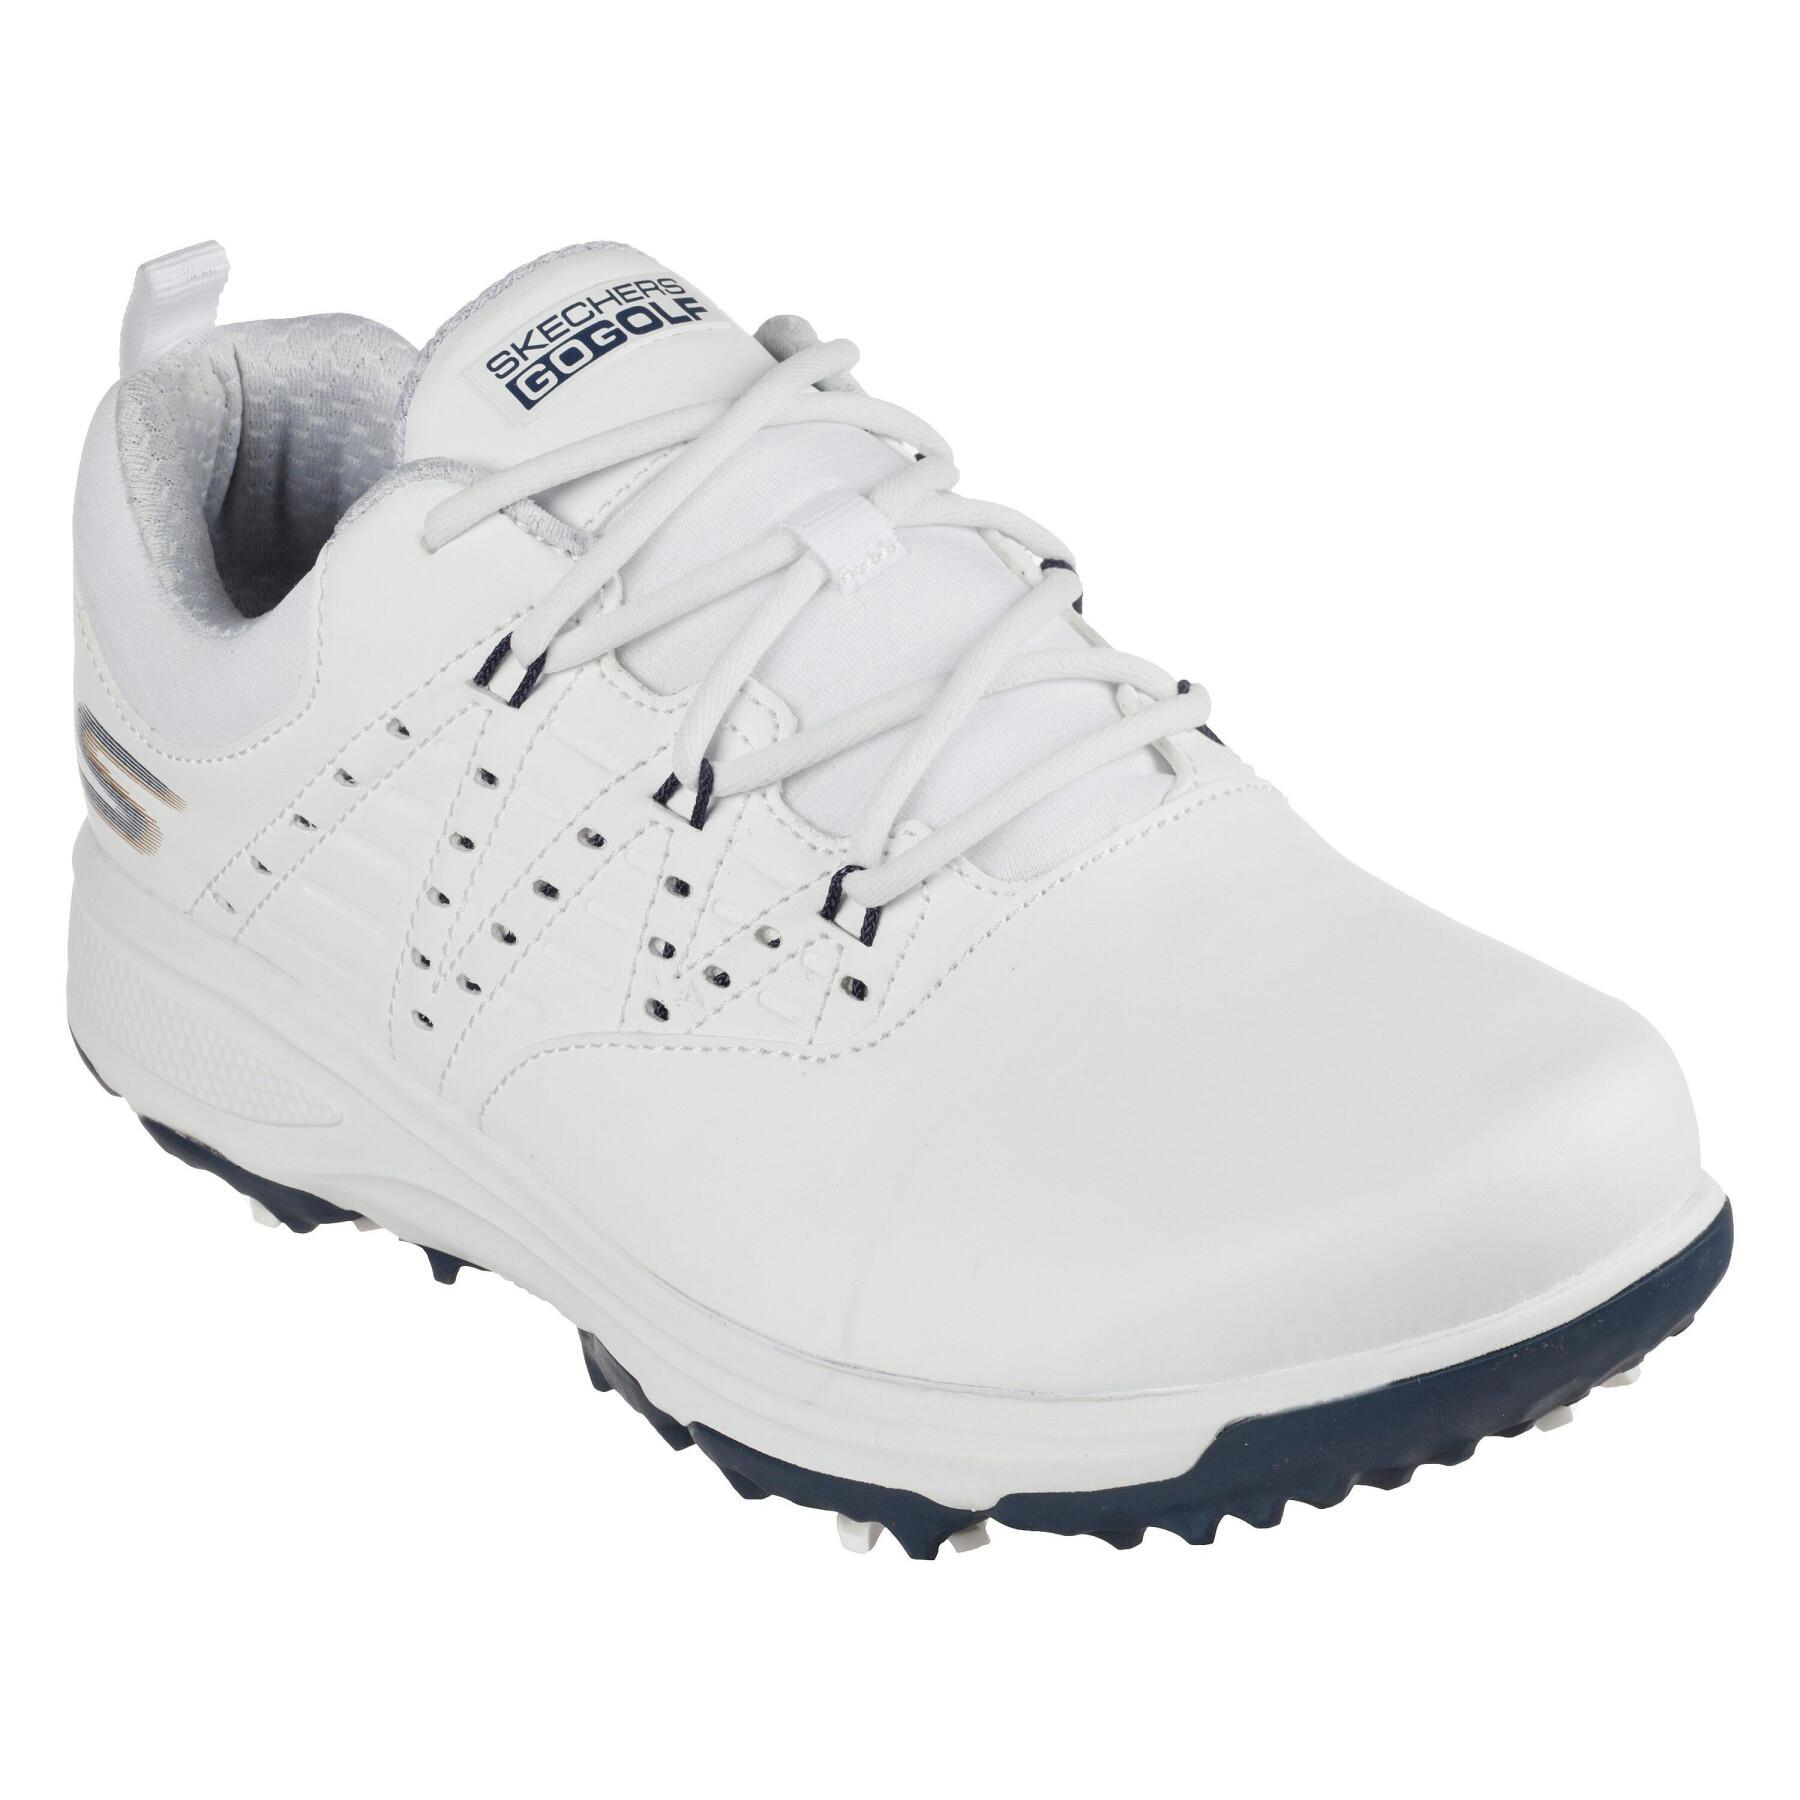 Damskie buty do golfa Skechers Golf Pro 2